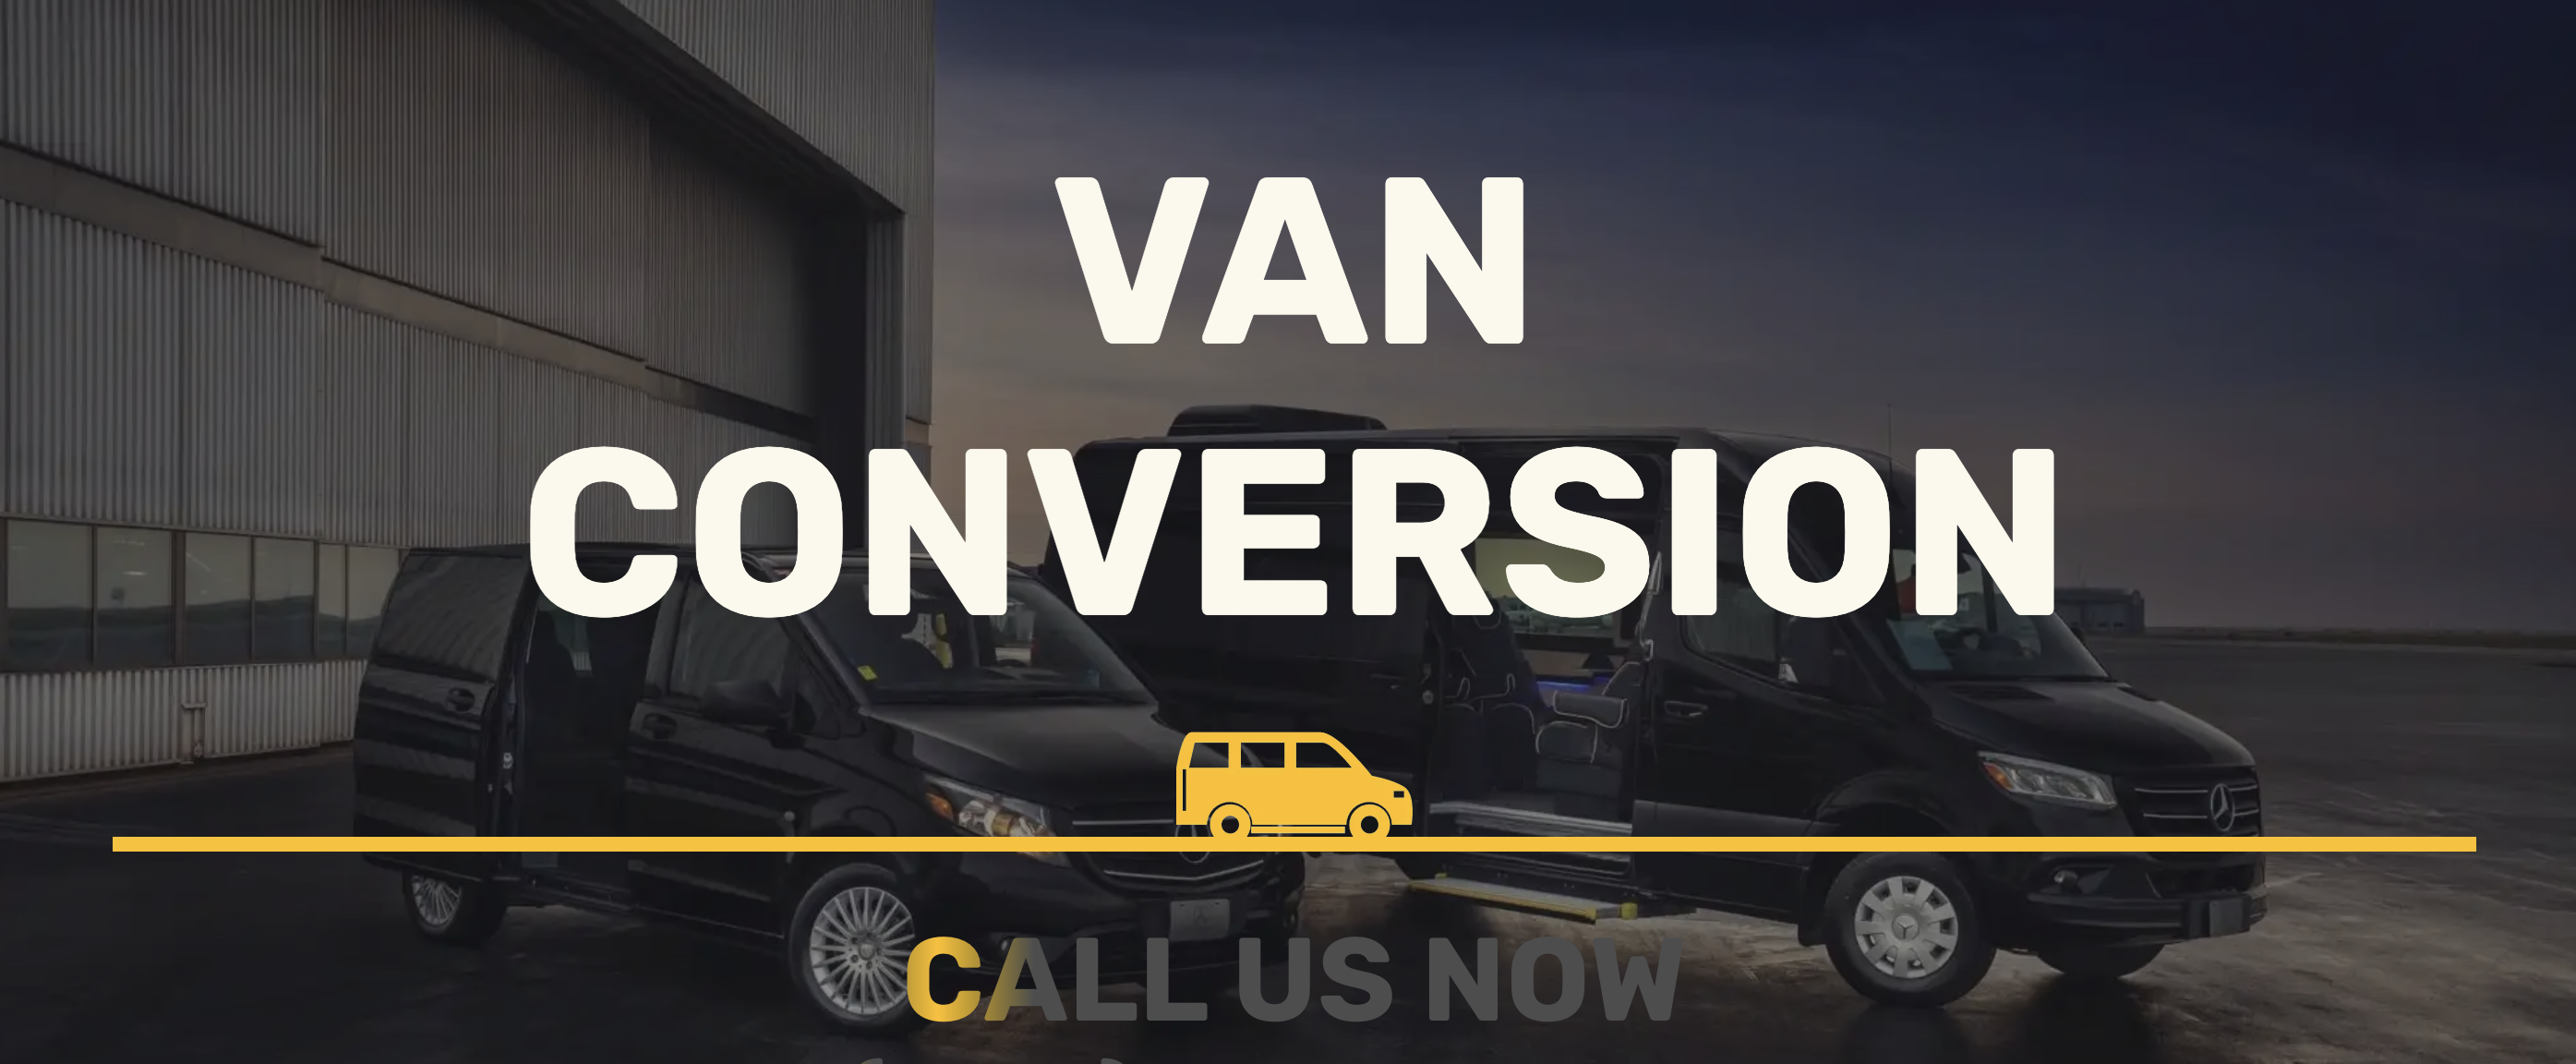 Van Conversion